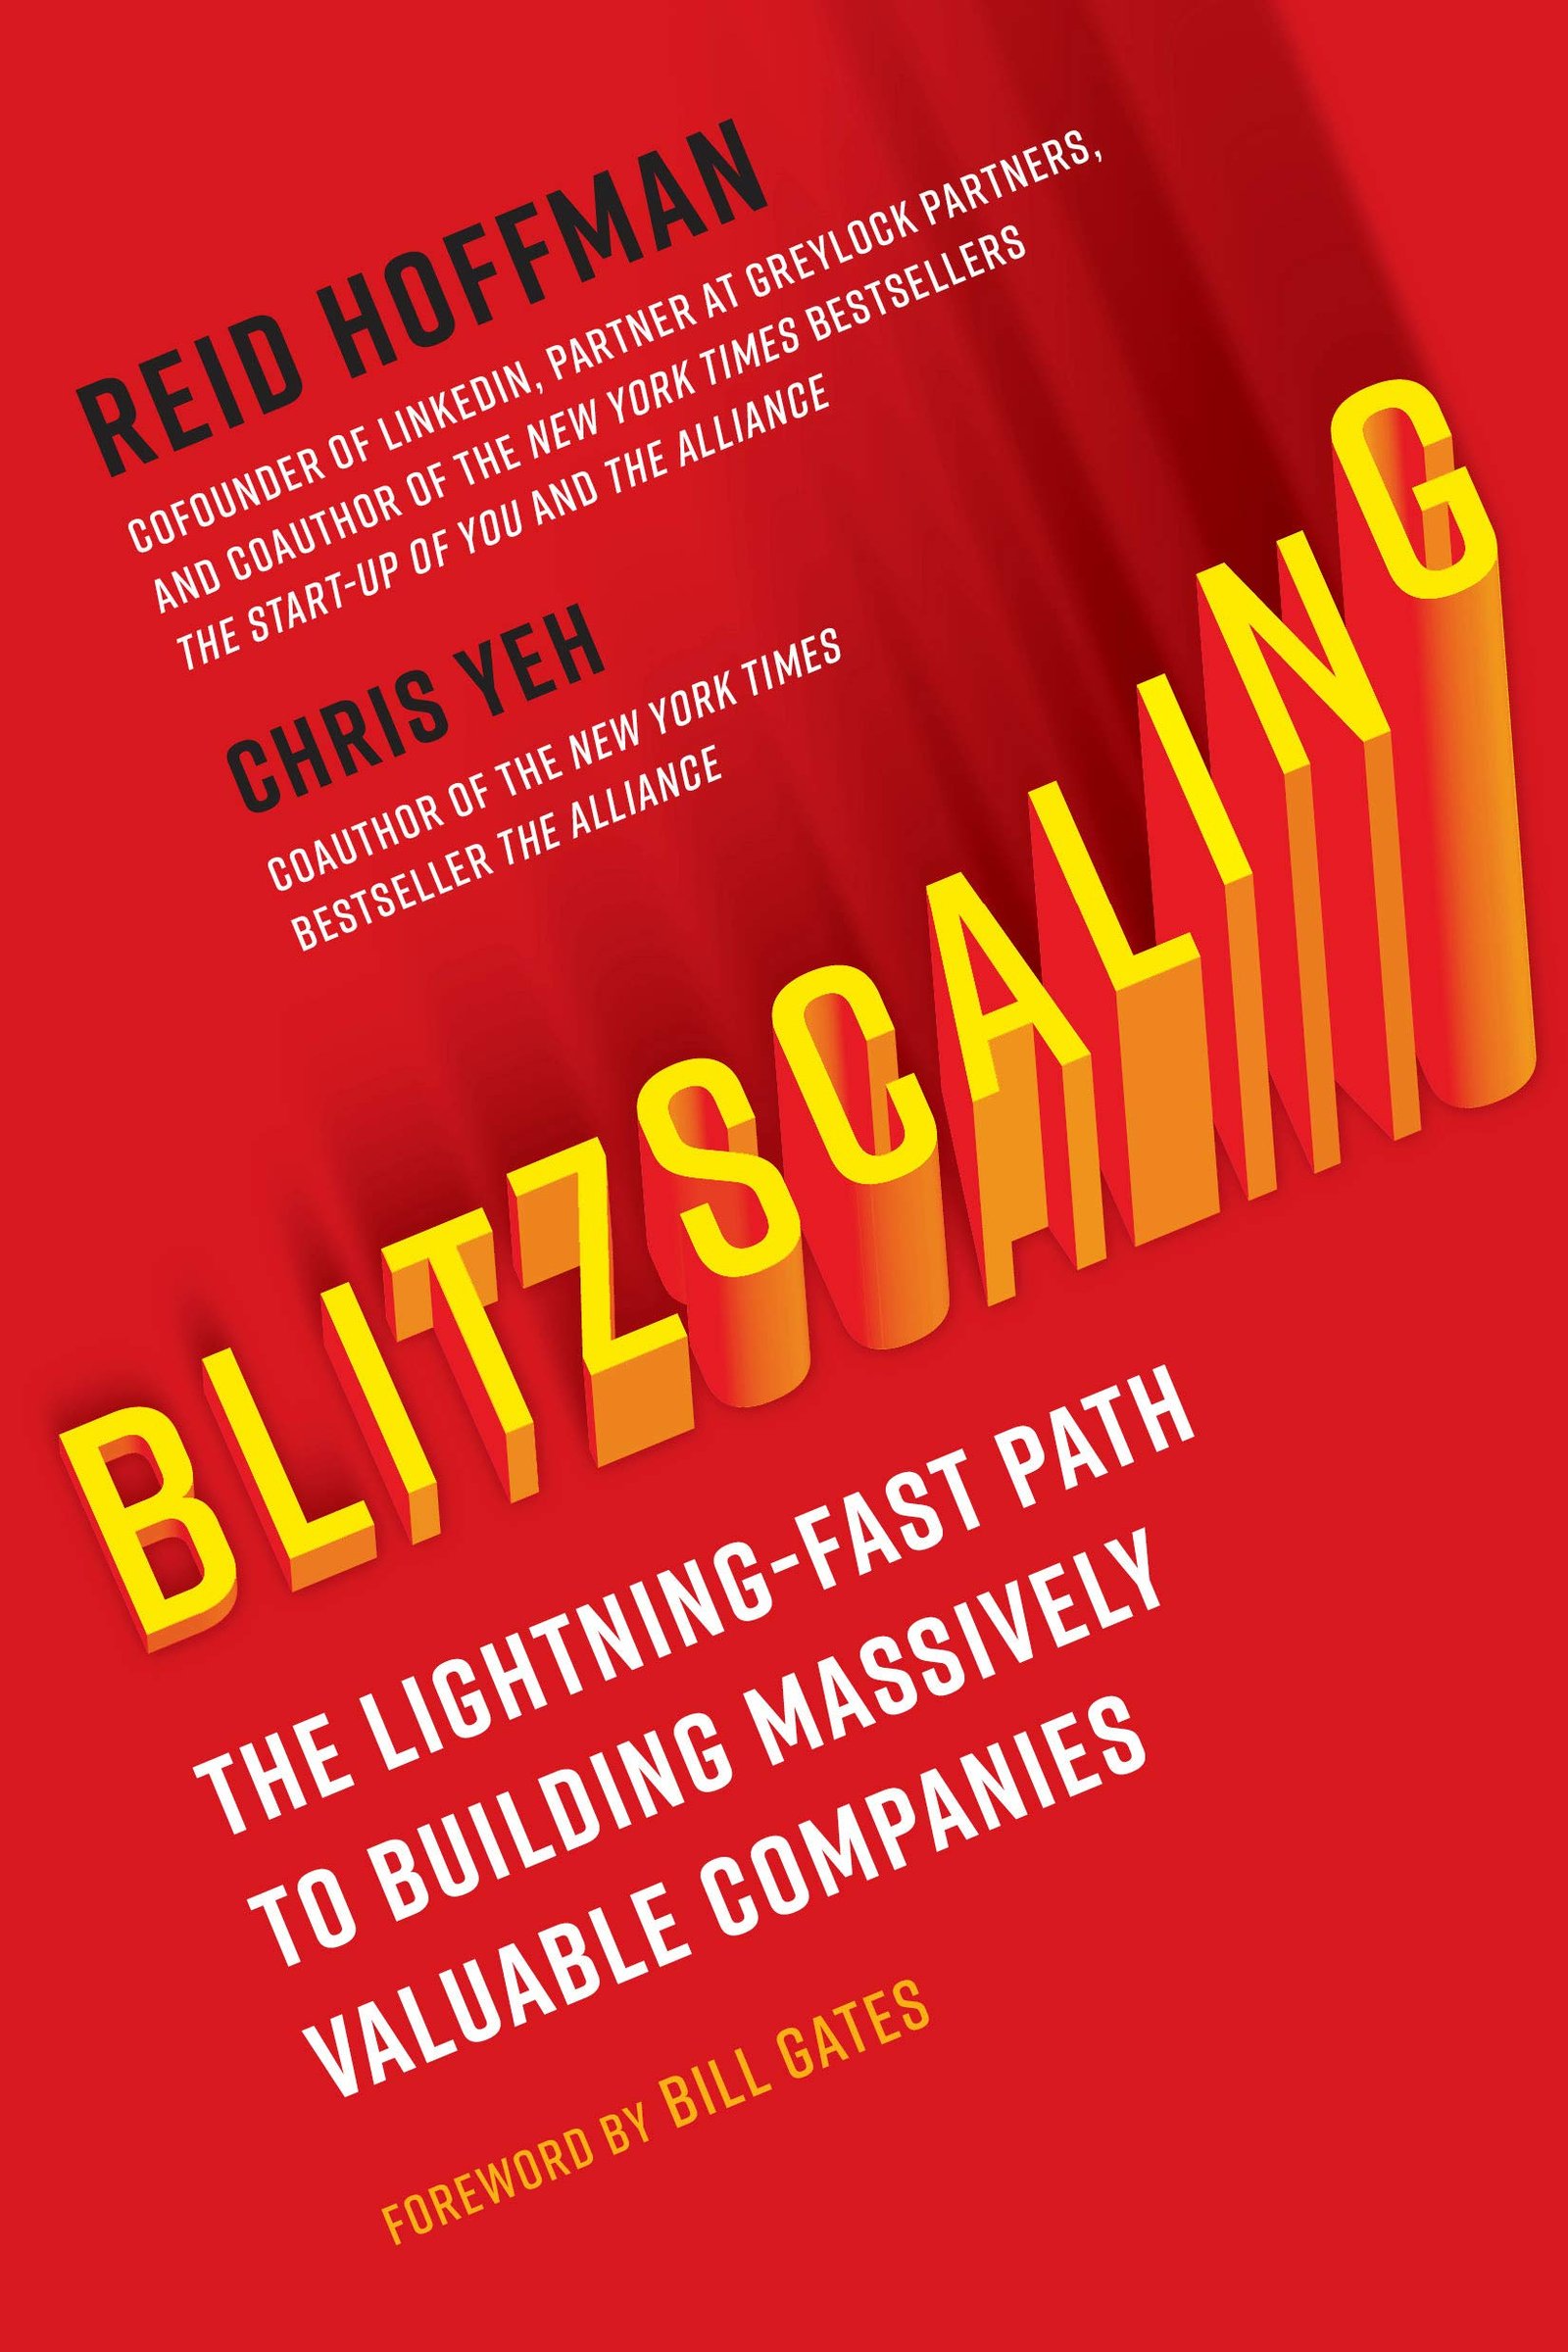 Blitzscaling- BOOK REVIEW